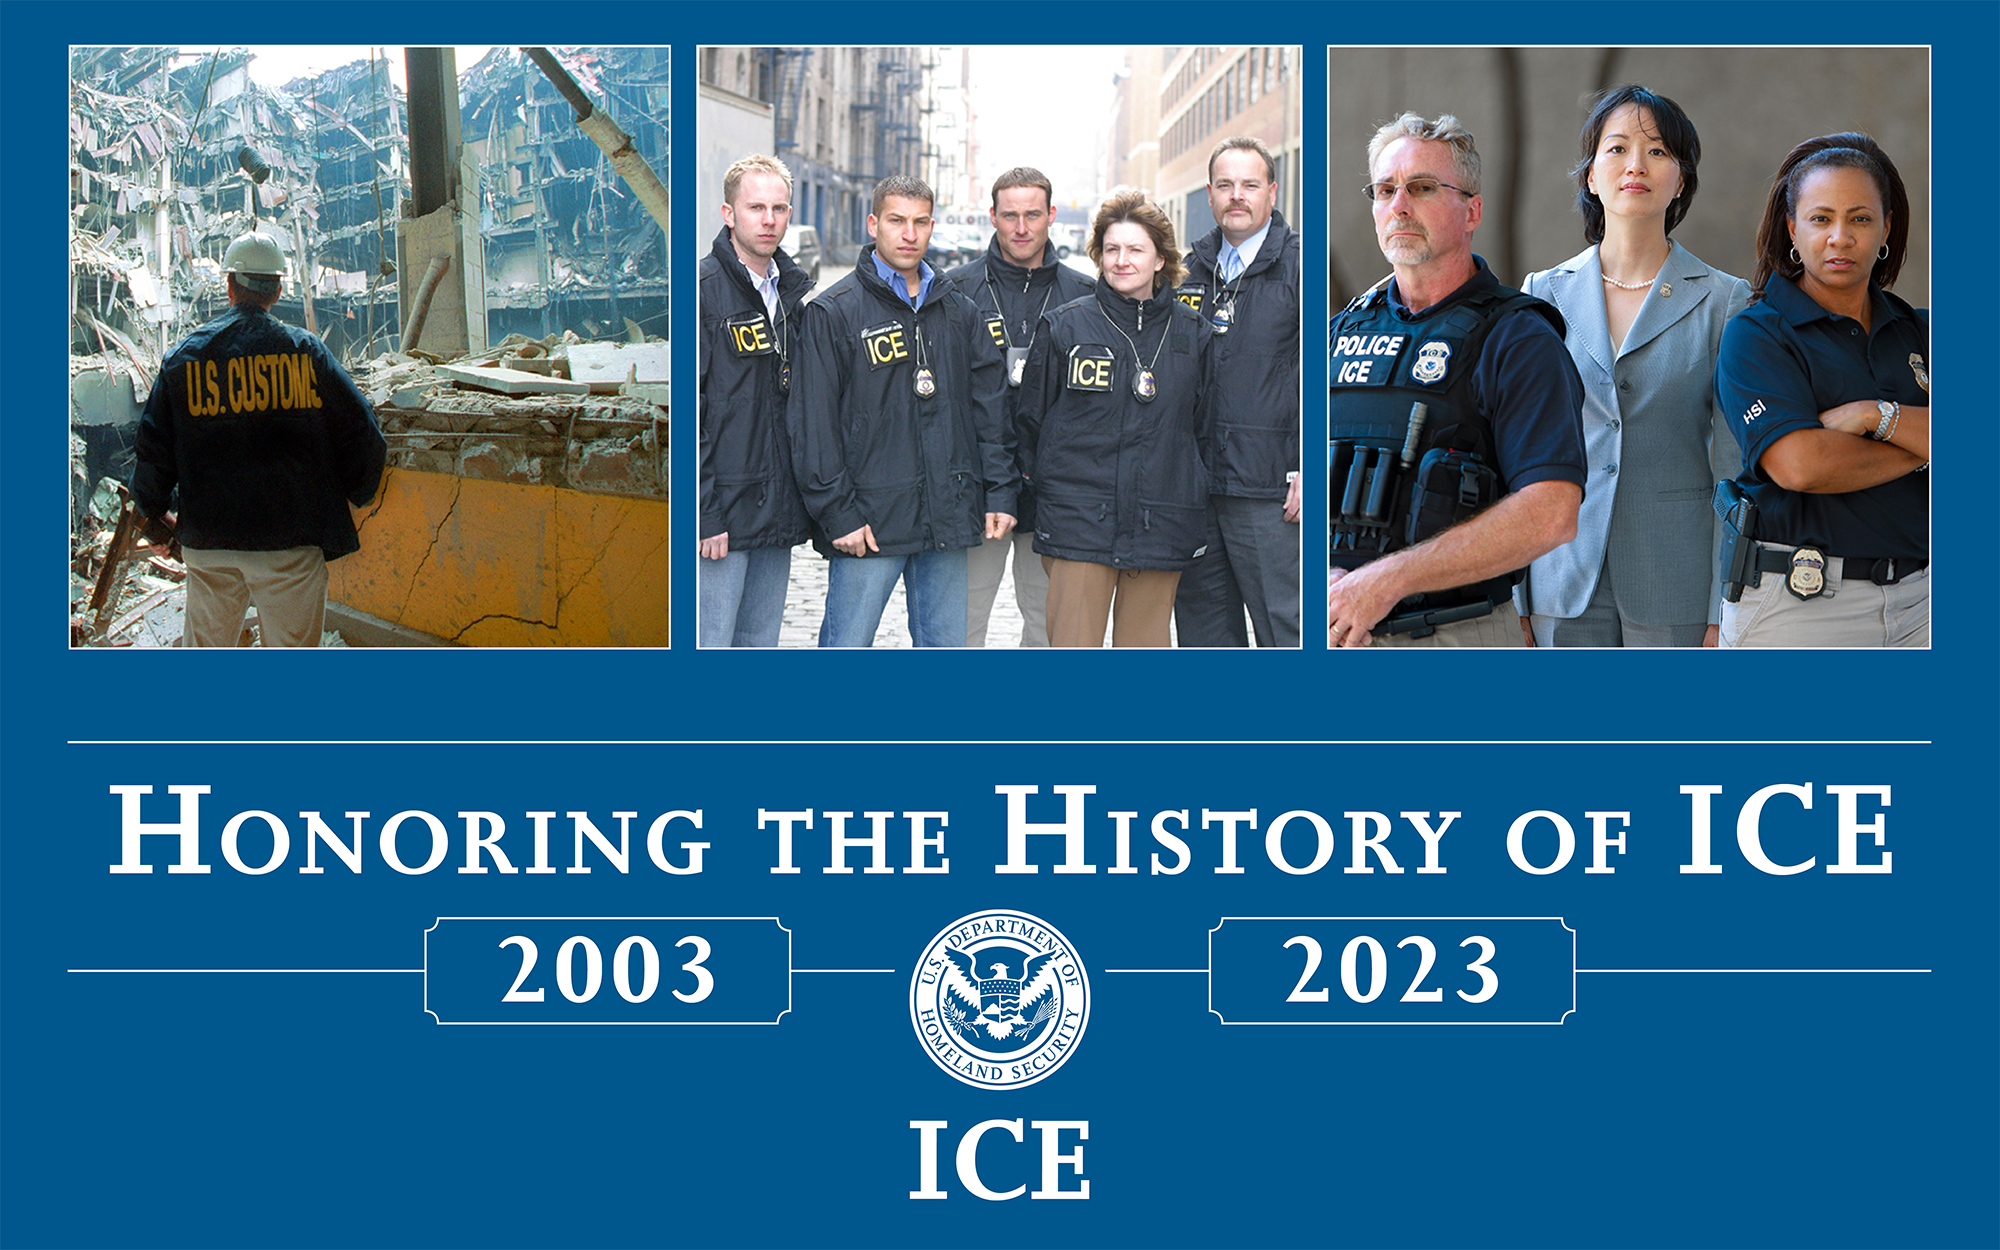 History of ICE